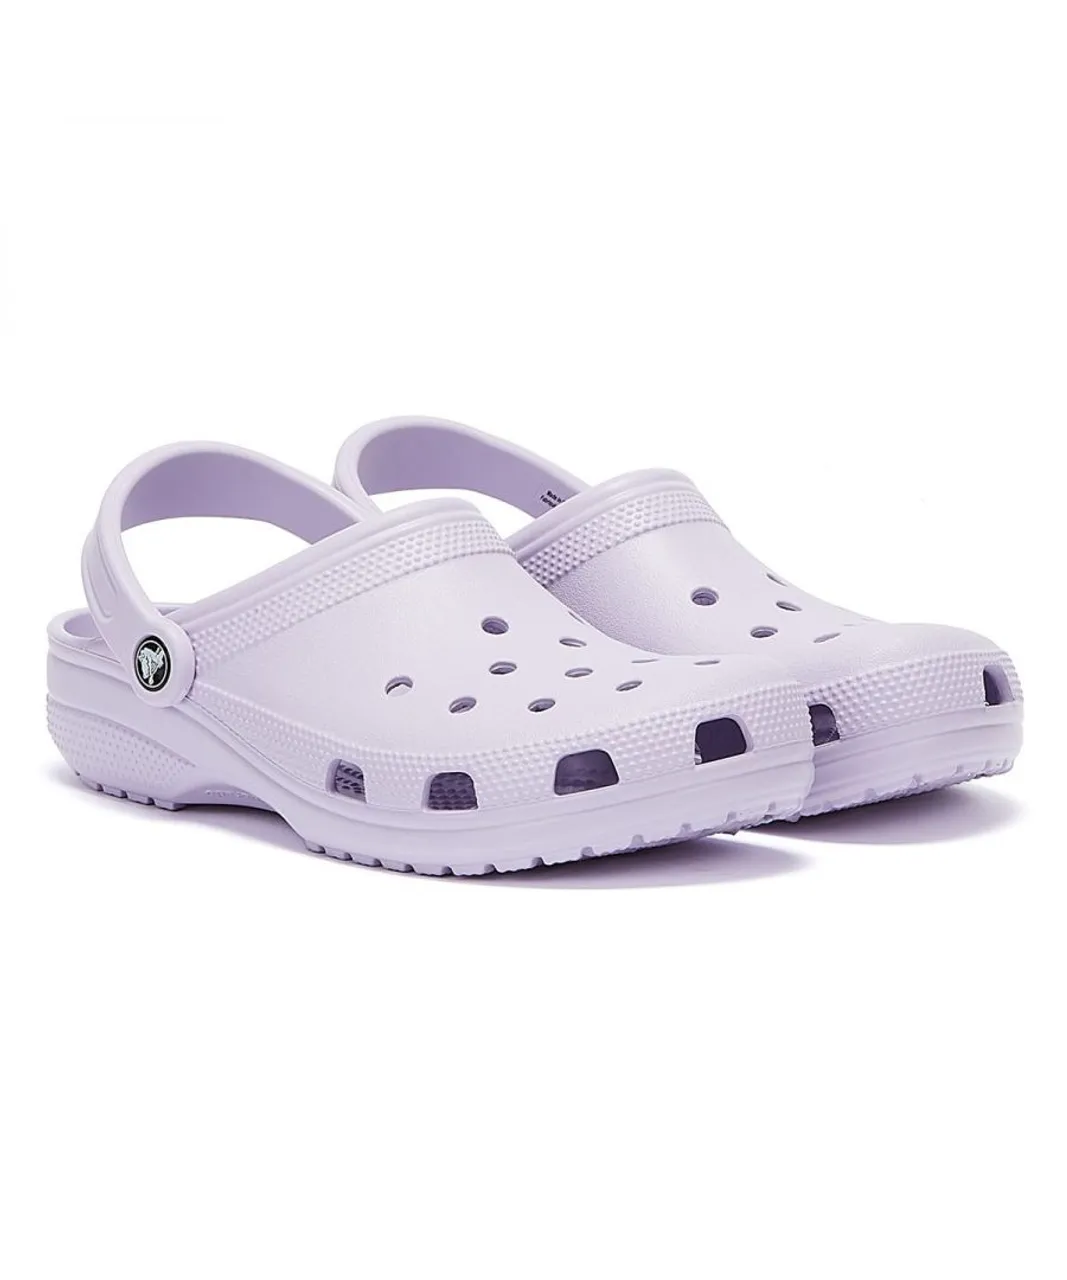 Crocs Womenss Classic Clogs in Lavender - Purple